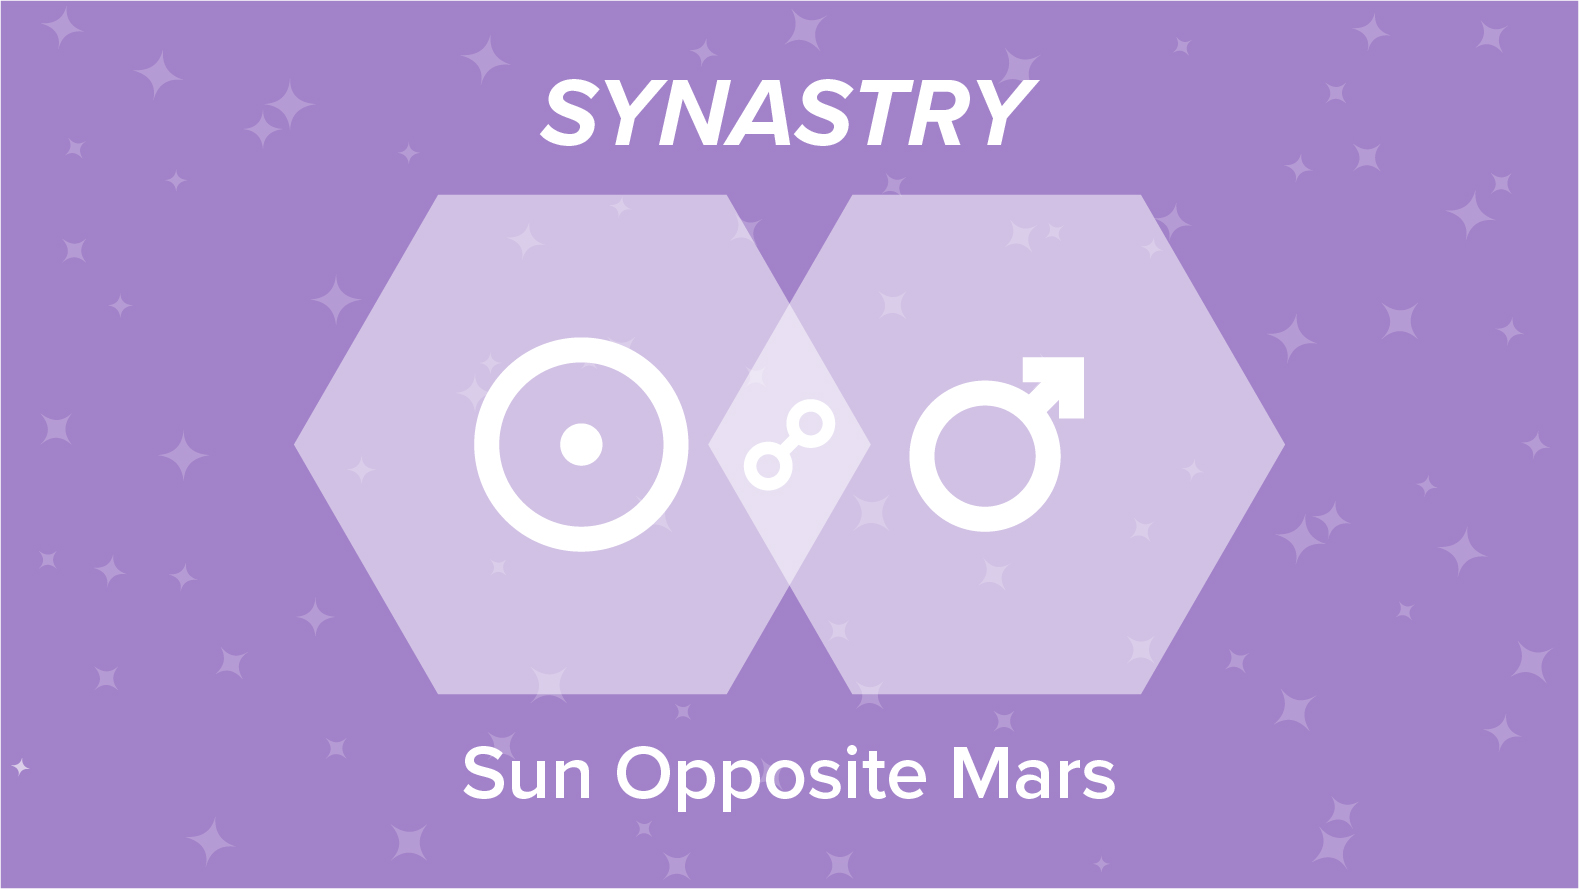 Sun Opposite Mars Synastry: Relationships and Friendships Explained